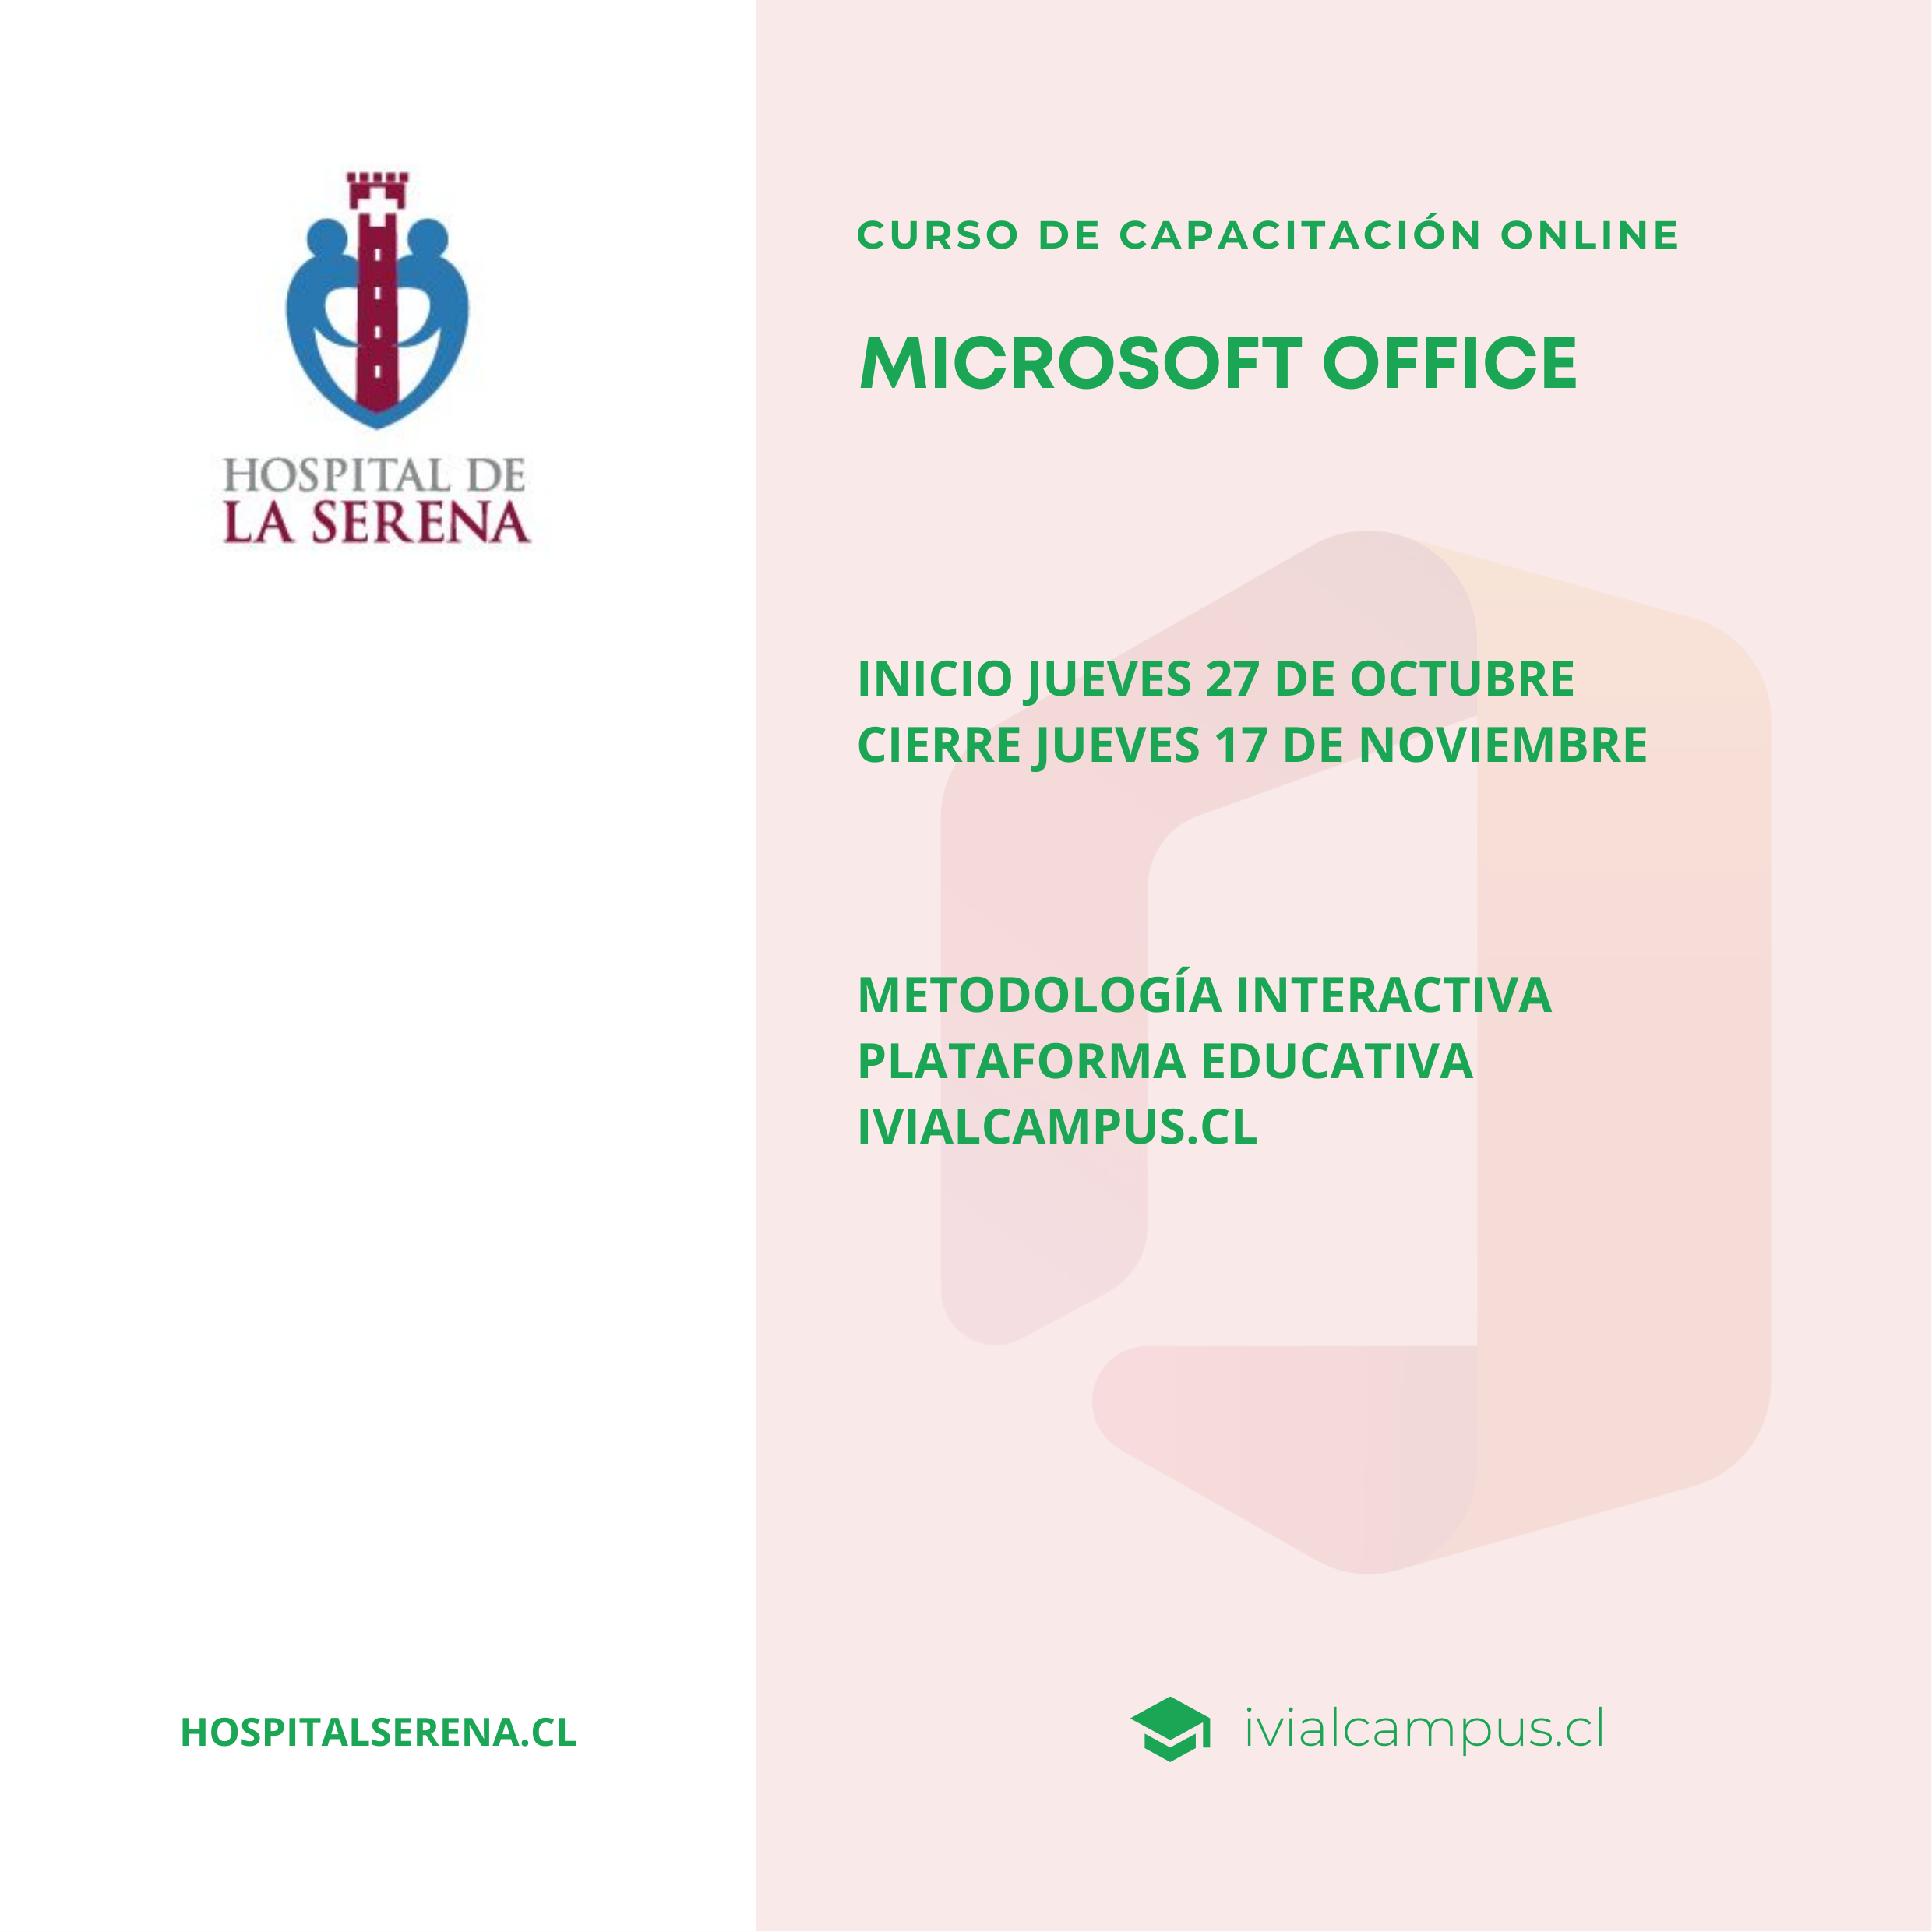 HOSPITAL DE LA SERENA: Microsoft Office